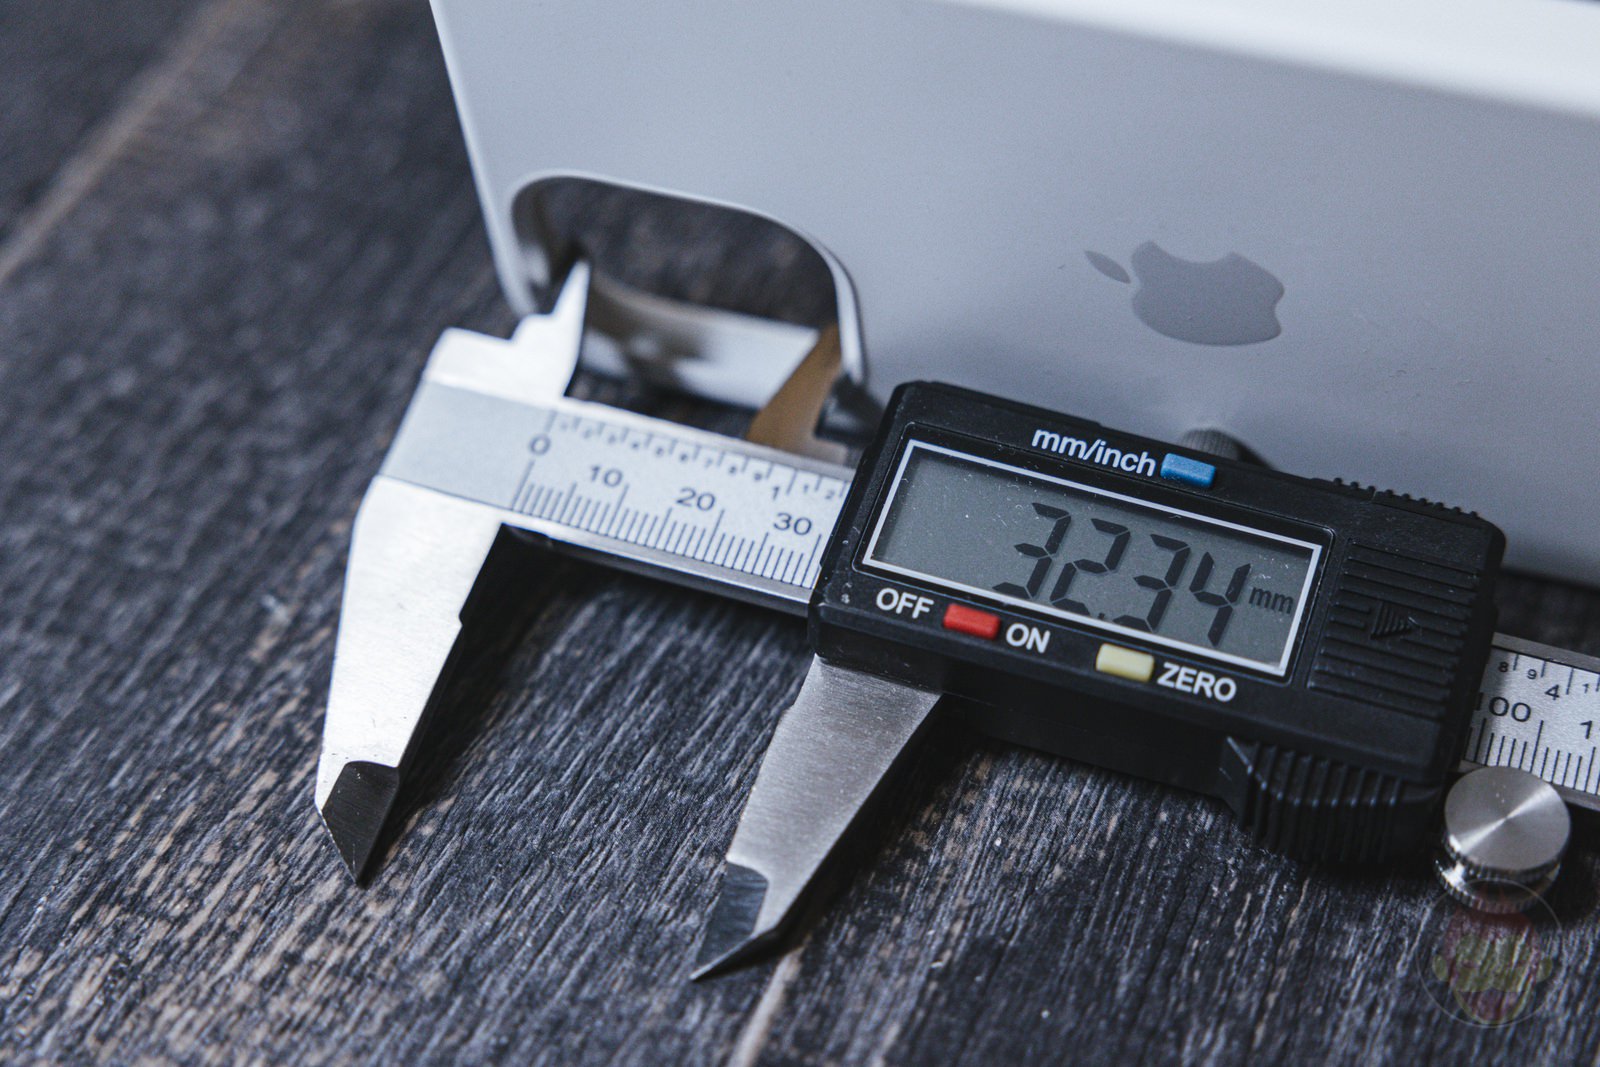 Iphone13pro case measurement comparison with iphone12pro 03